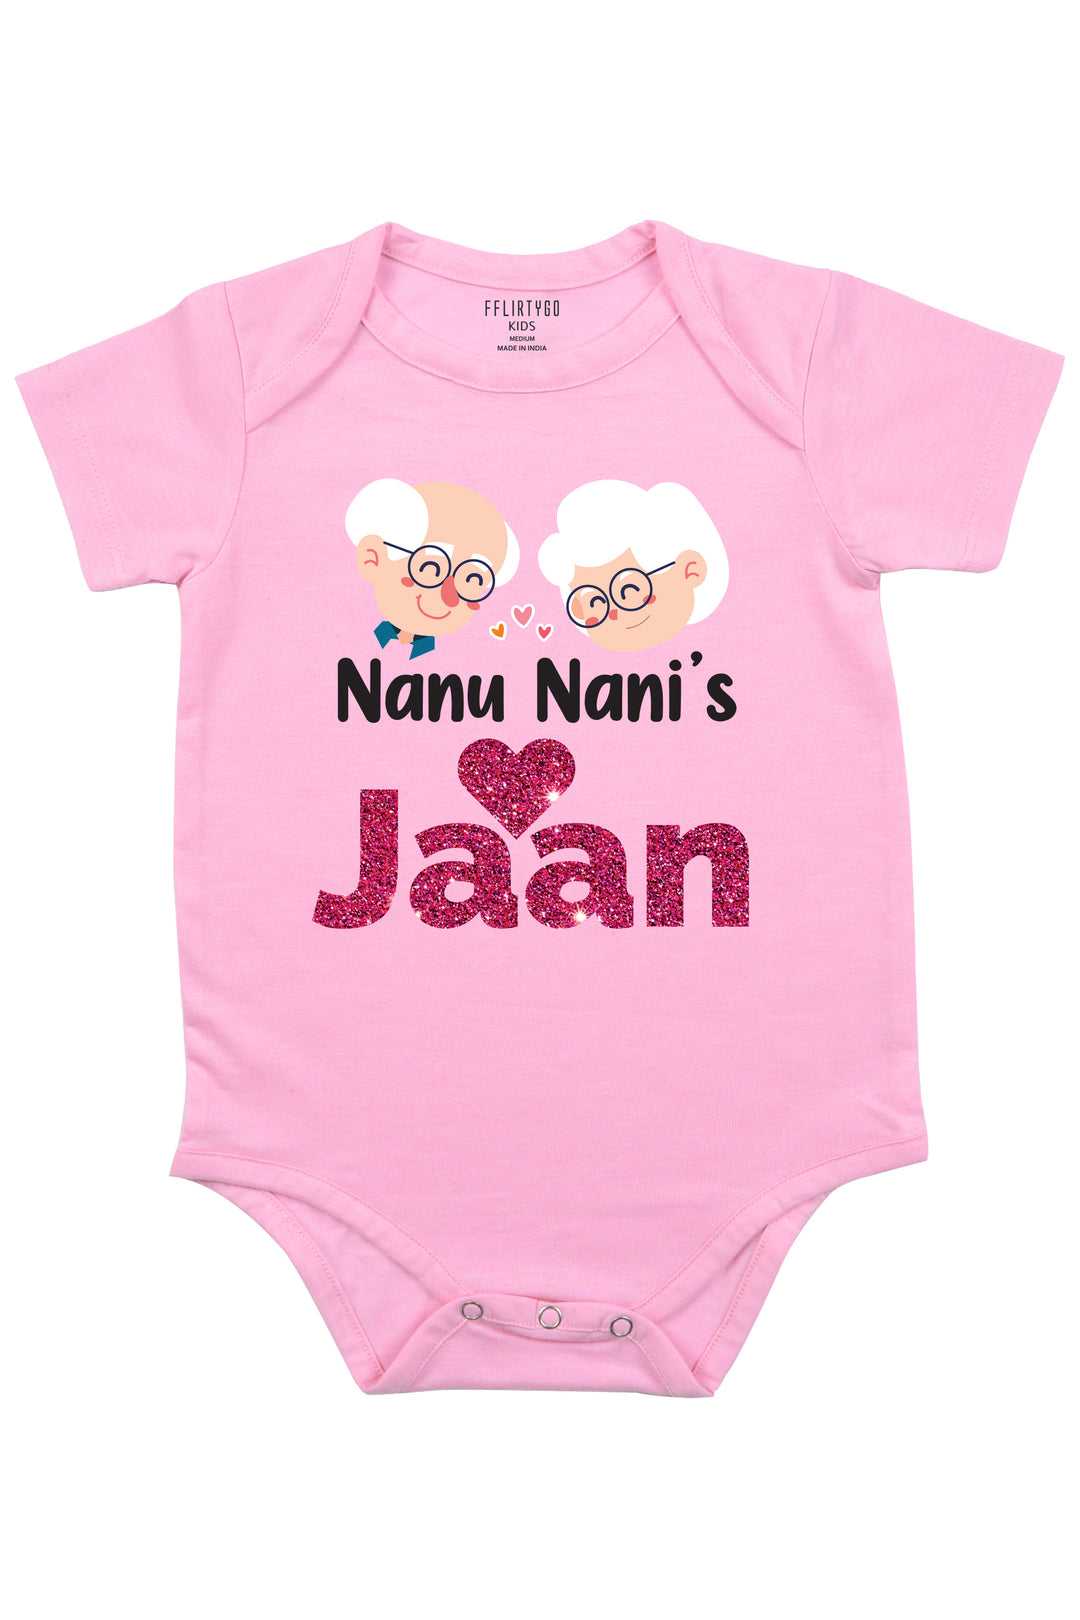 Nanu and Nani's Jaan - FflirtyGo